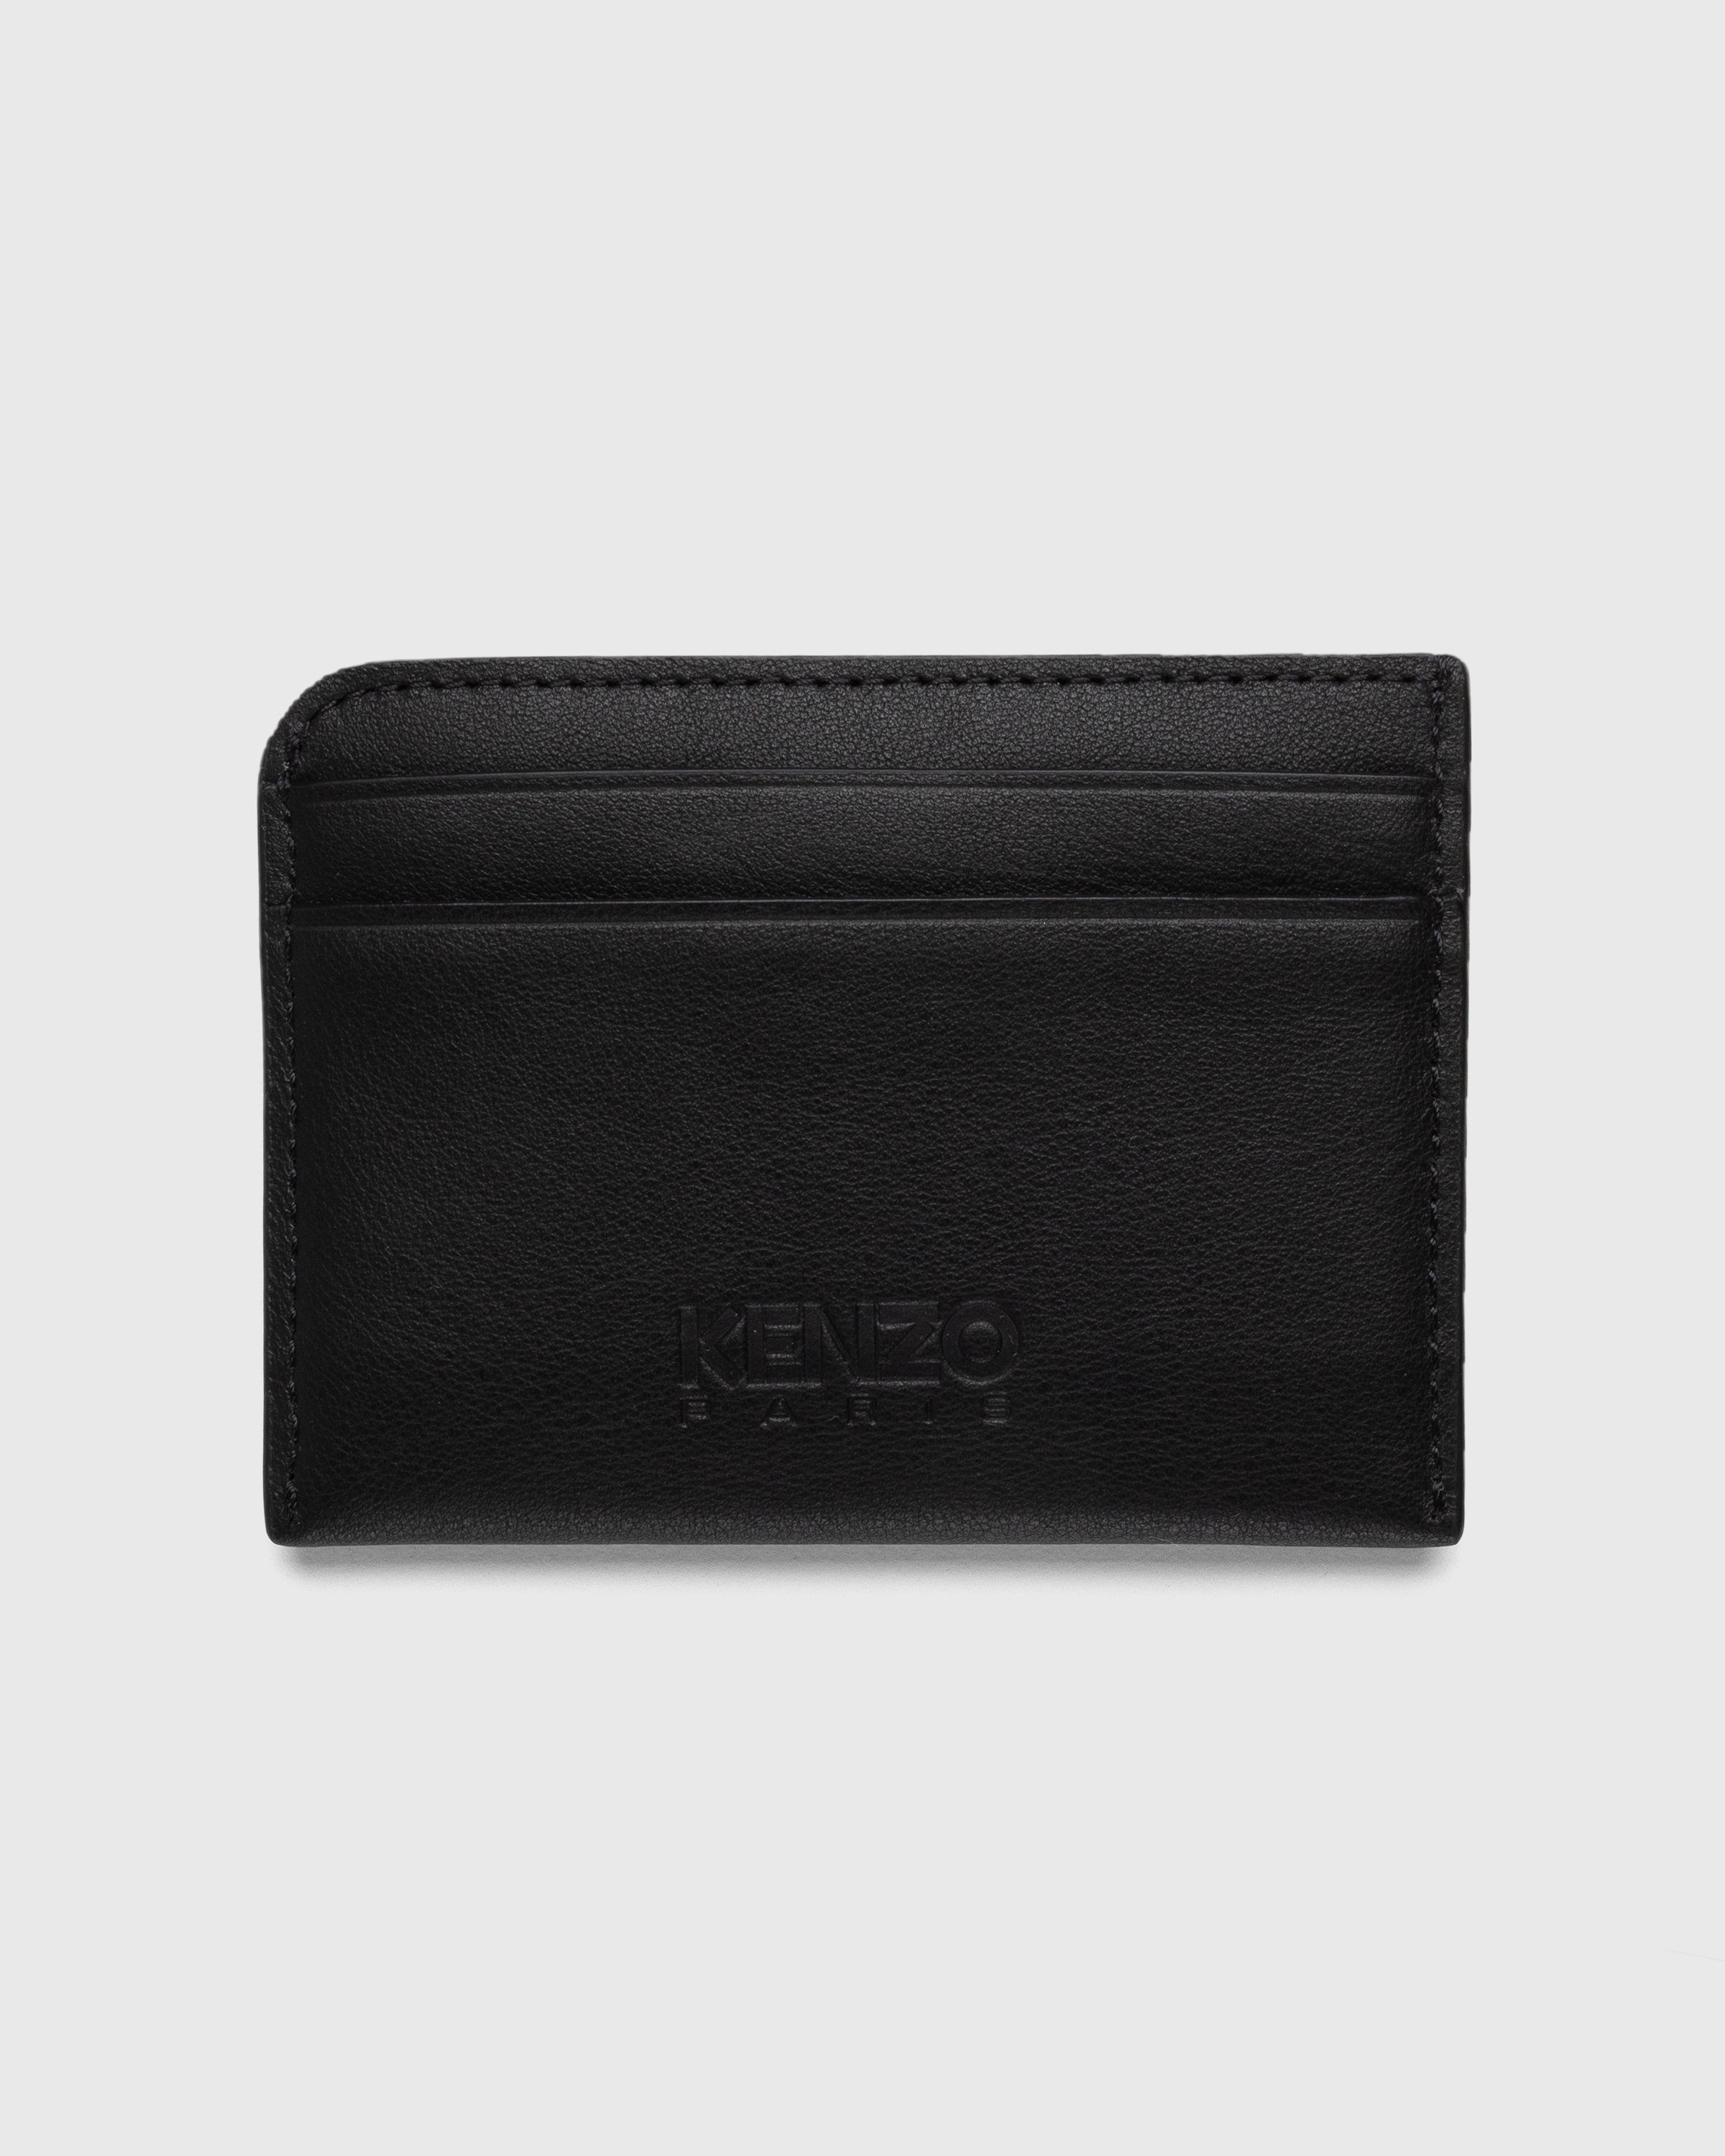 Kenzo - Crest Cardholder Black - Accessories - Black - Image 2